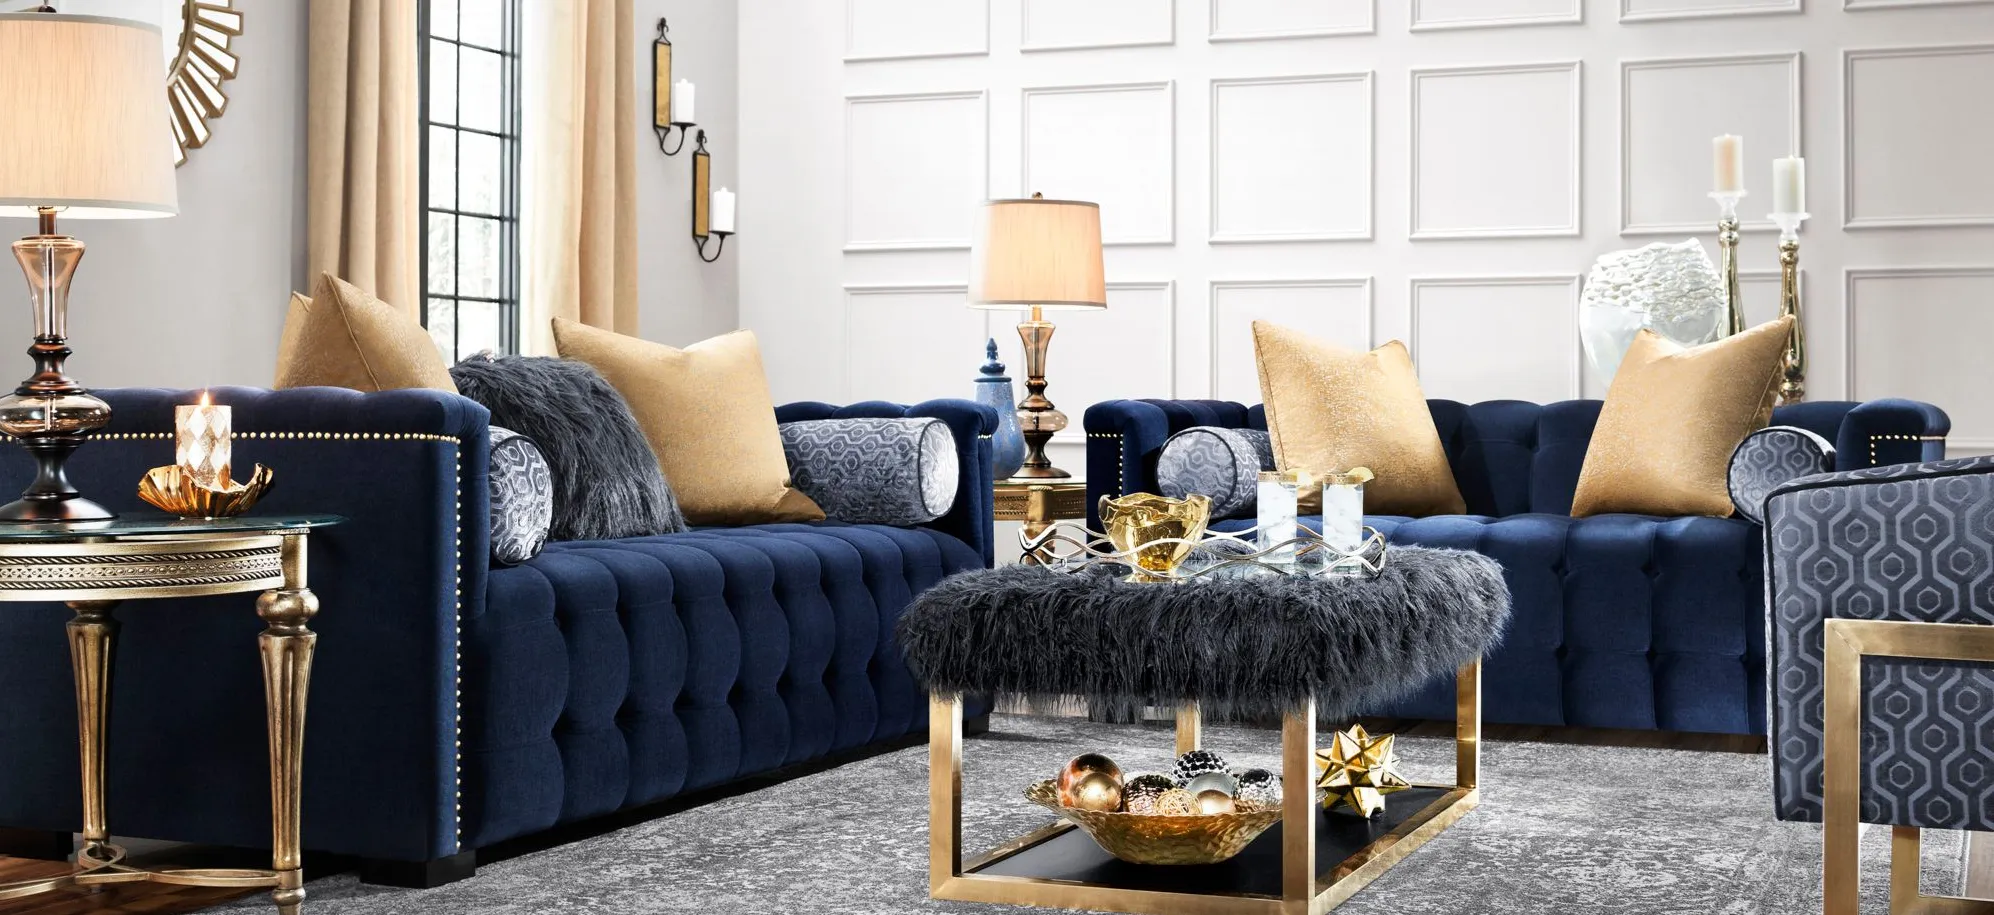 Diana 2-pc.. Sofa and Loveseat Set in Indigo by Aria Designs